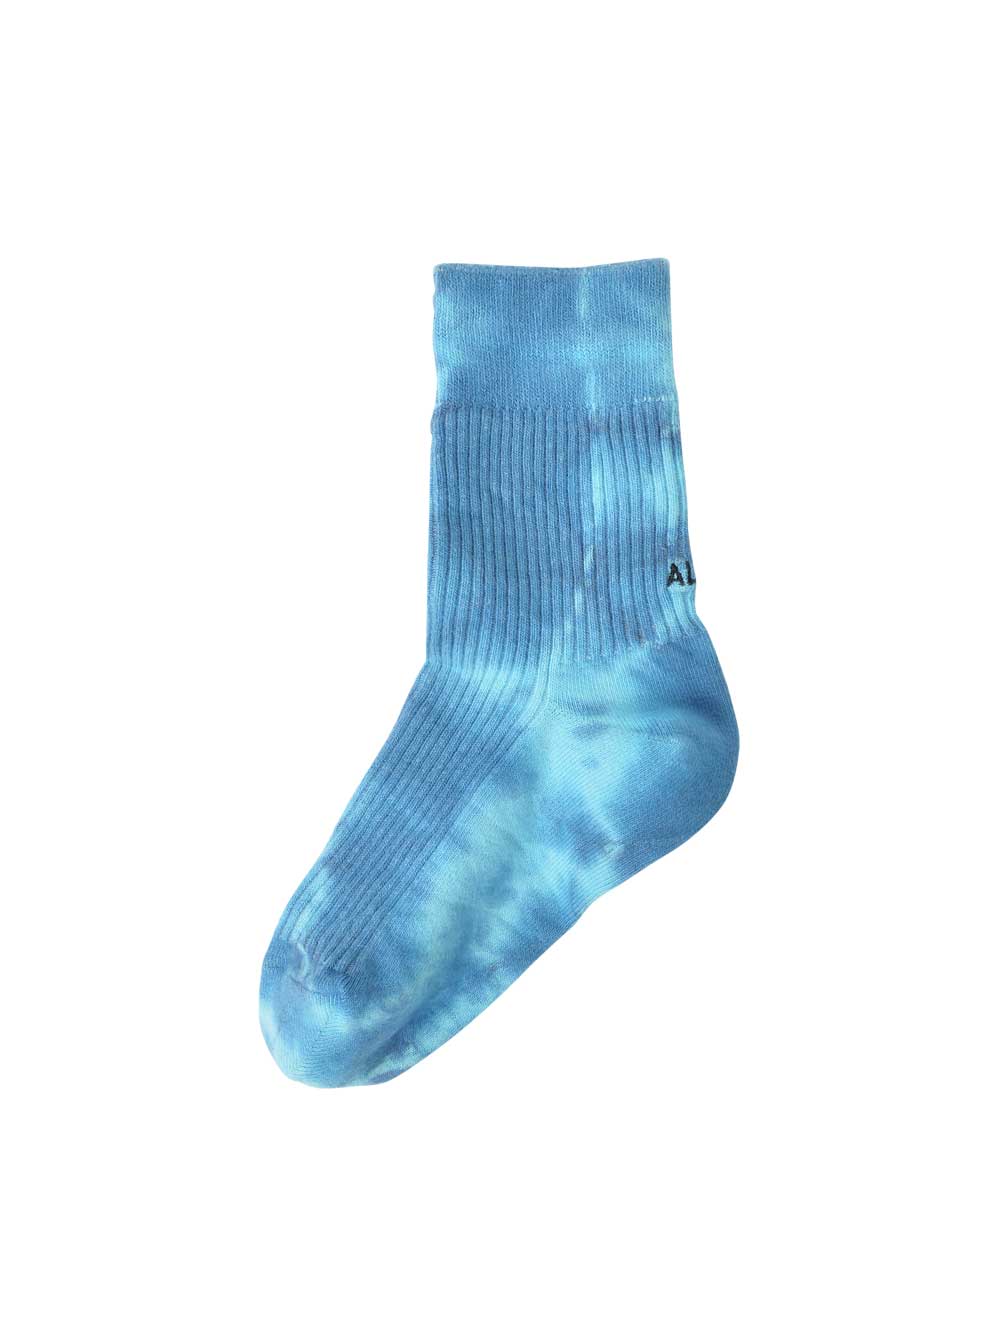 Blue Tie Dyed Socks